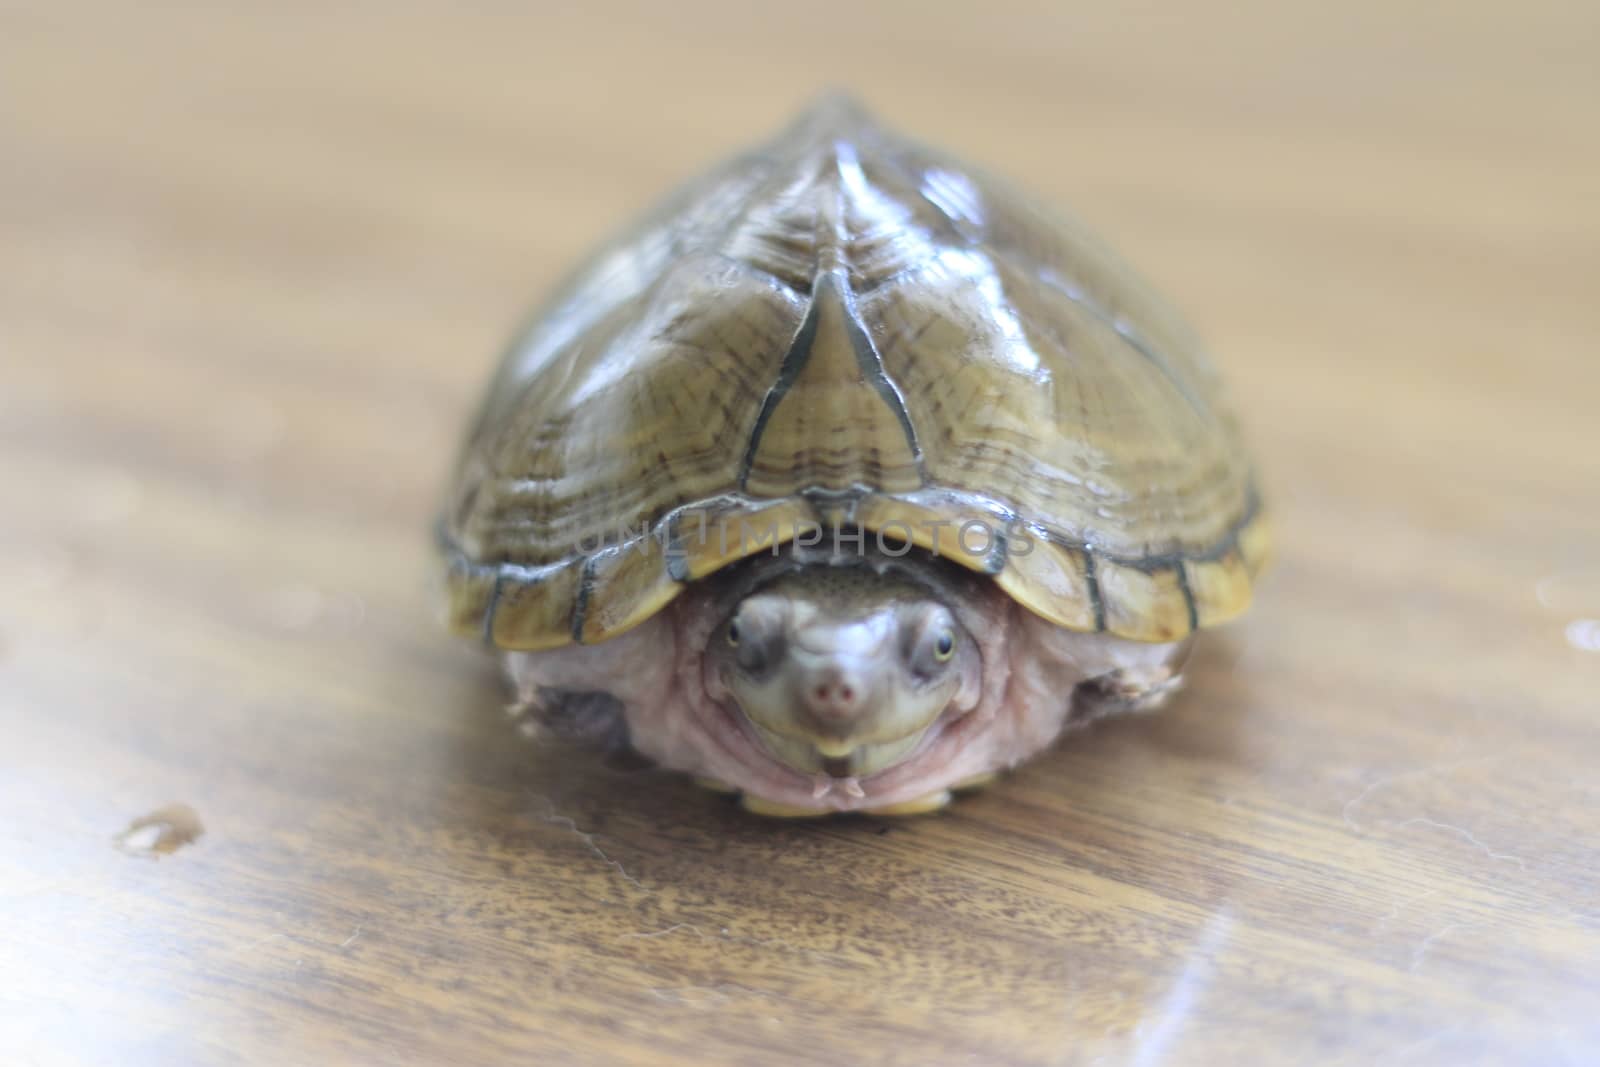 Razorback musk turtle or sternotherus carinatus isolated on table by mynewturtle1